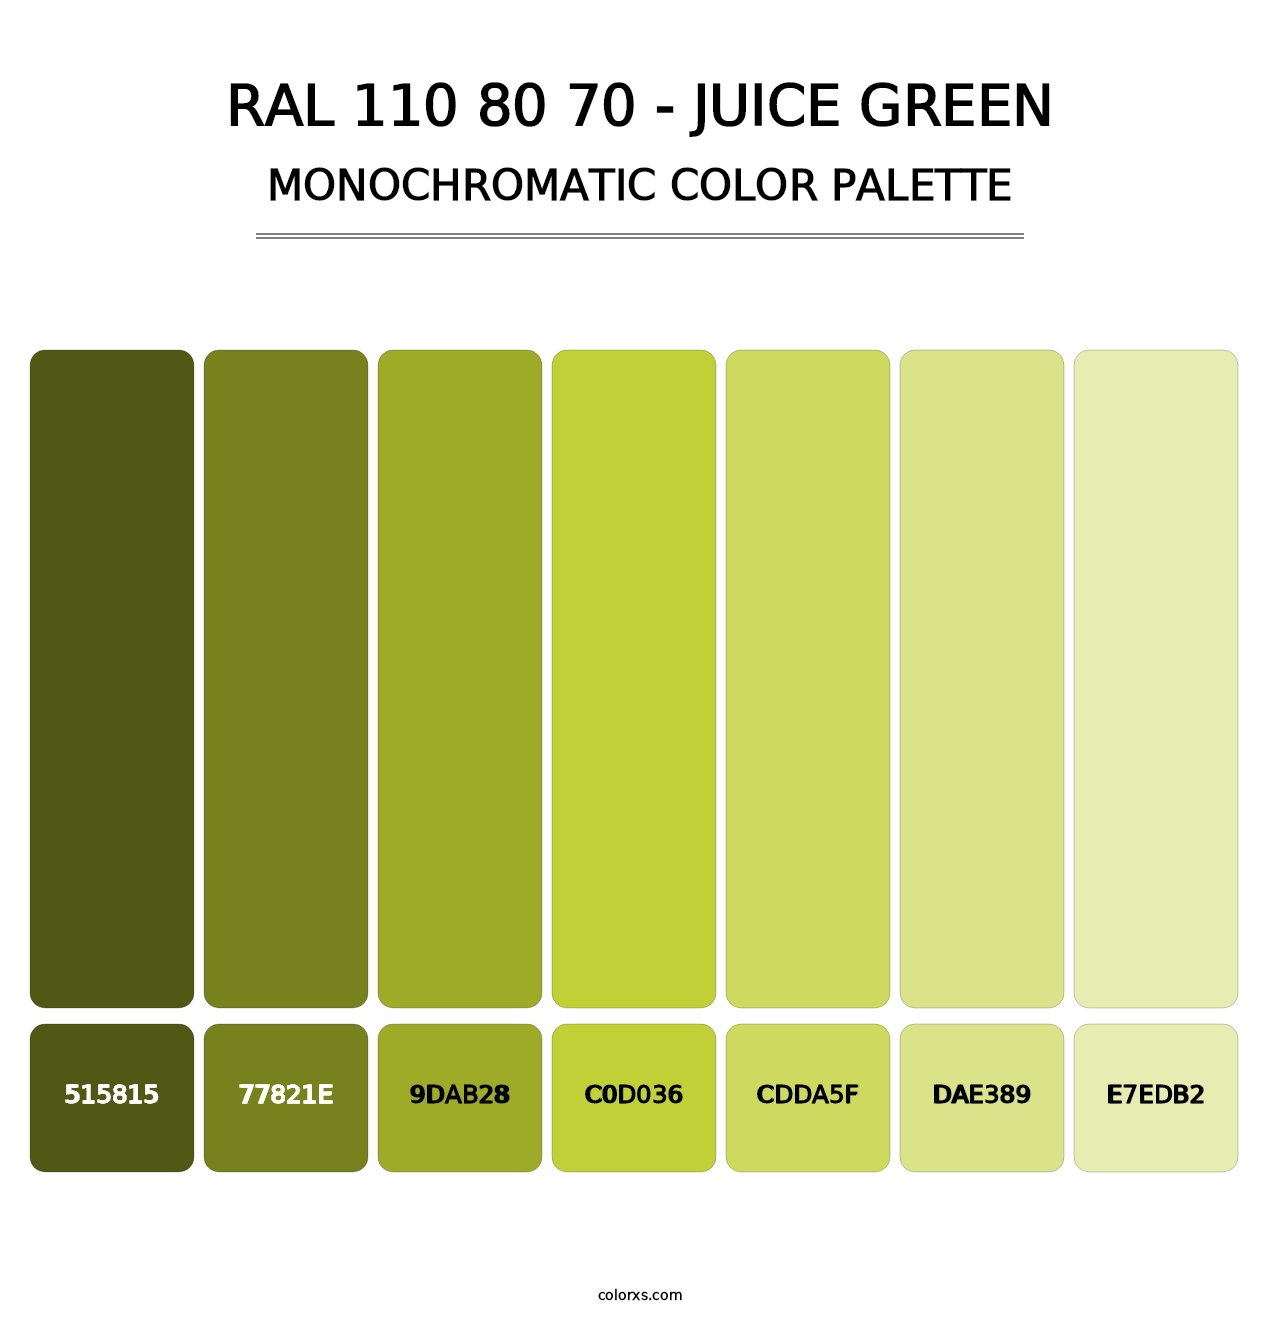 RAL 110 80 70 - Juice Green - Monochromatic Color Palette